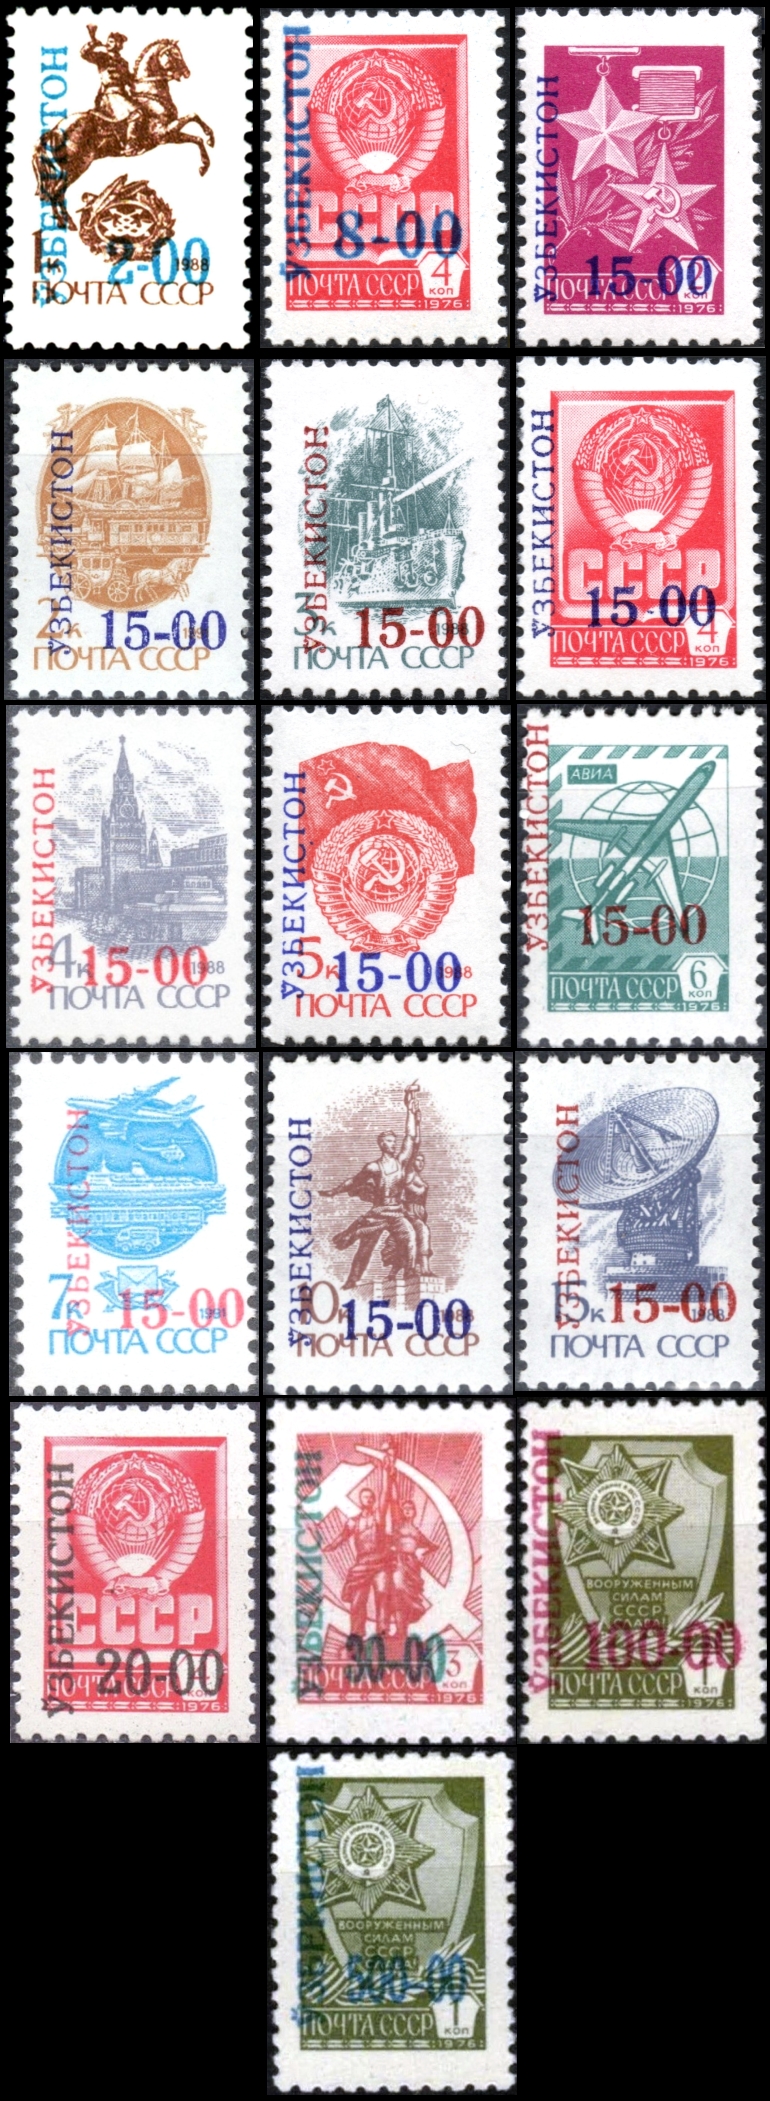 Uzbekistan 1993 Genuine Overprints on Russia Definitives Stamp Set